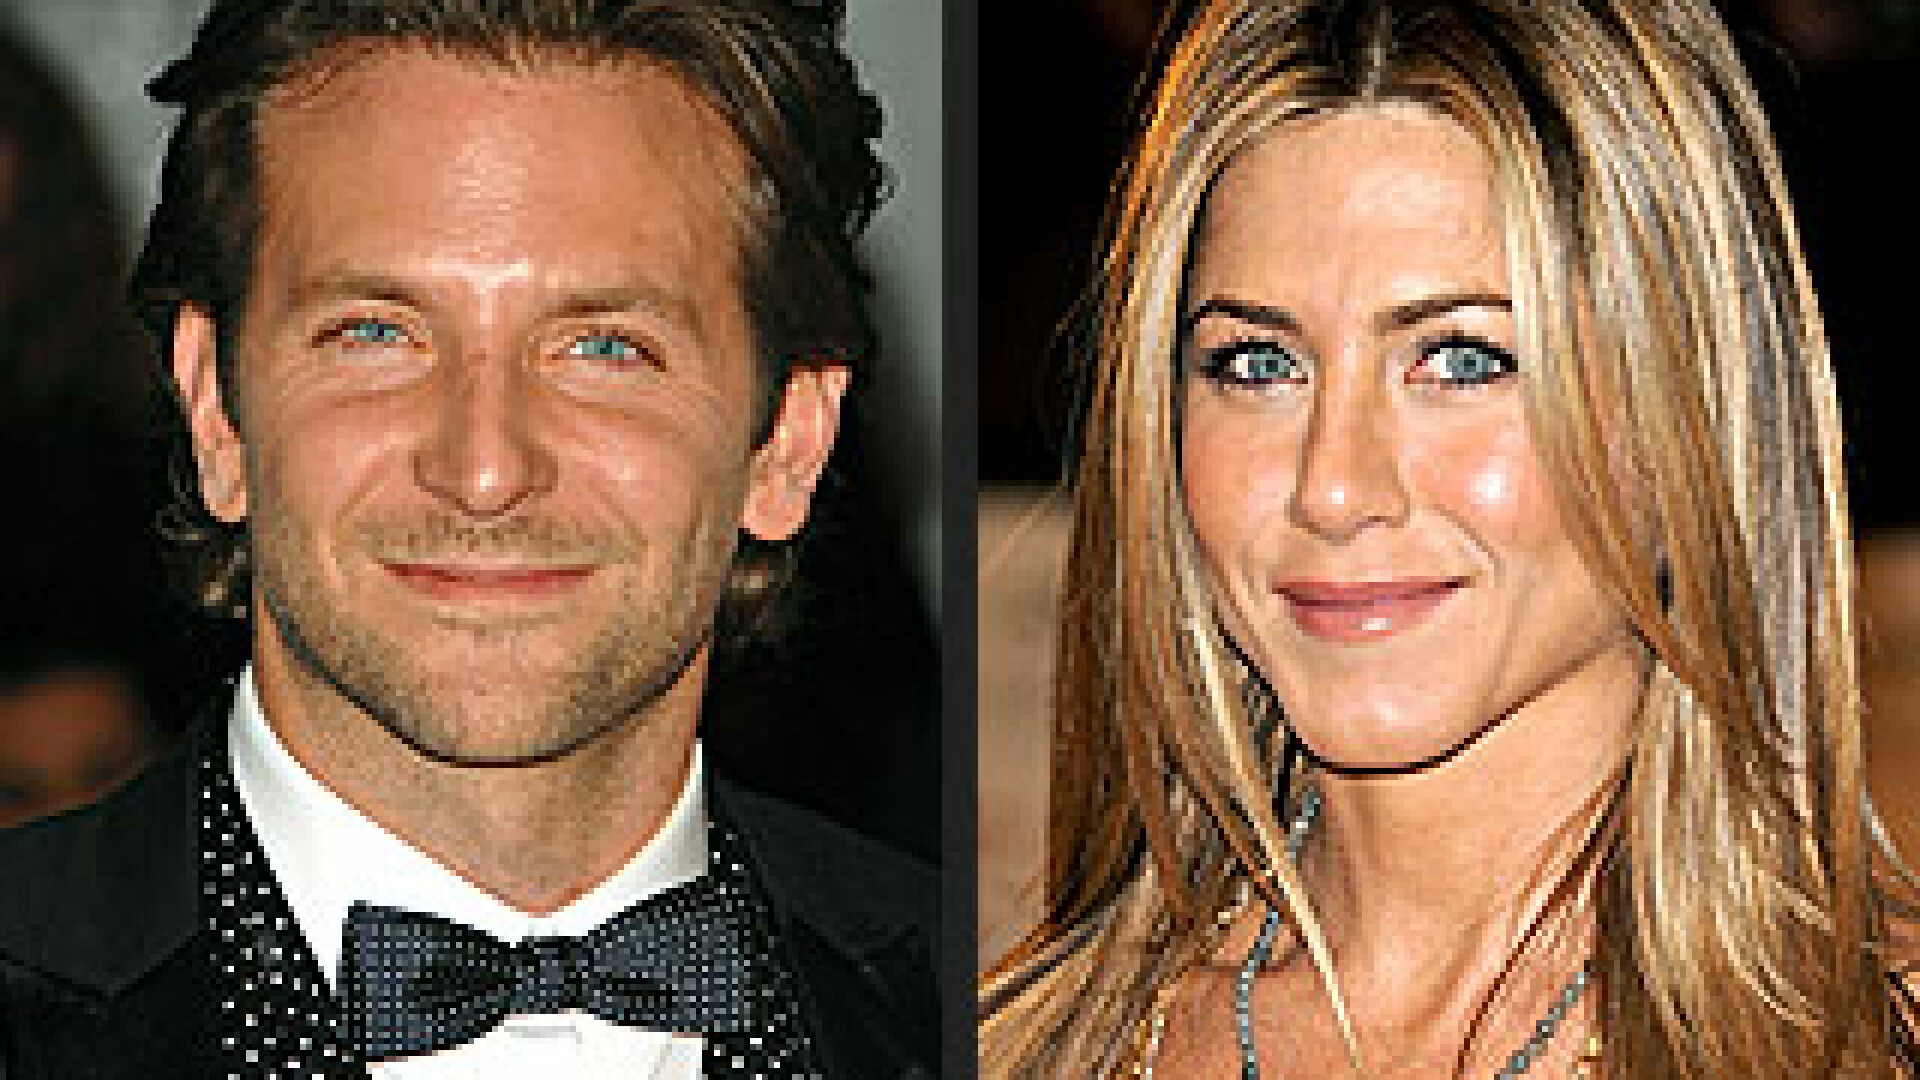 Jennifer Aniston, Bradley Cooper